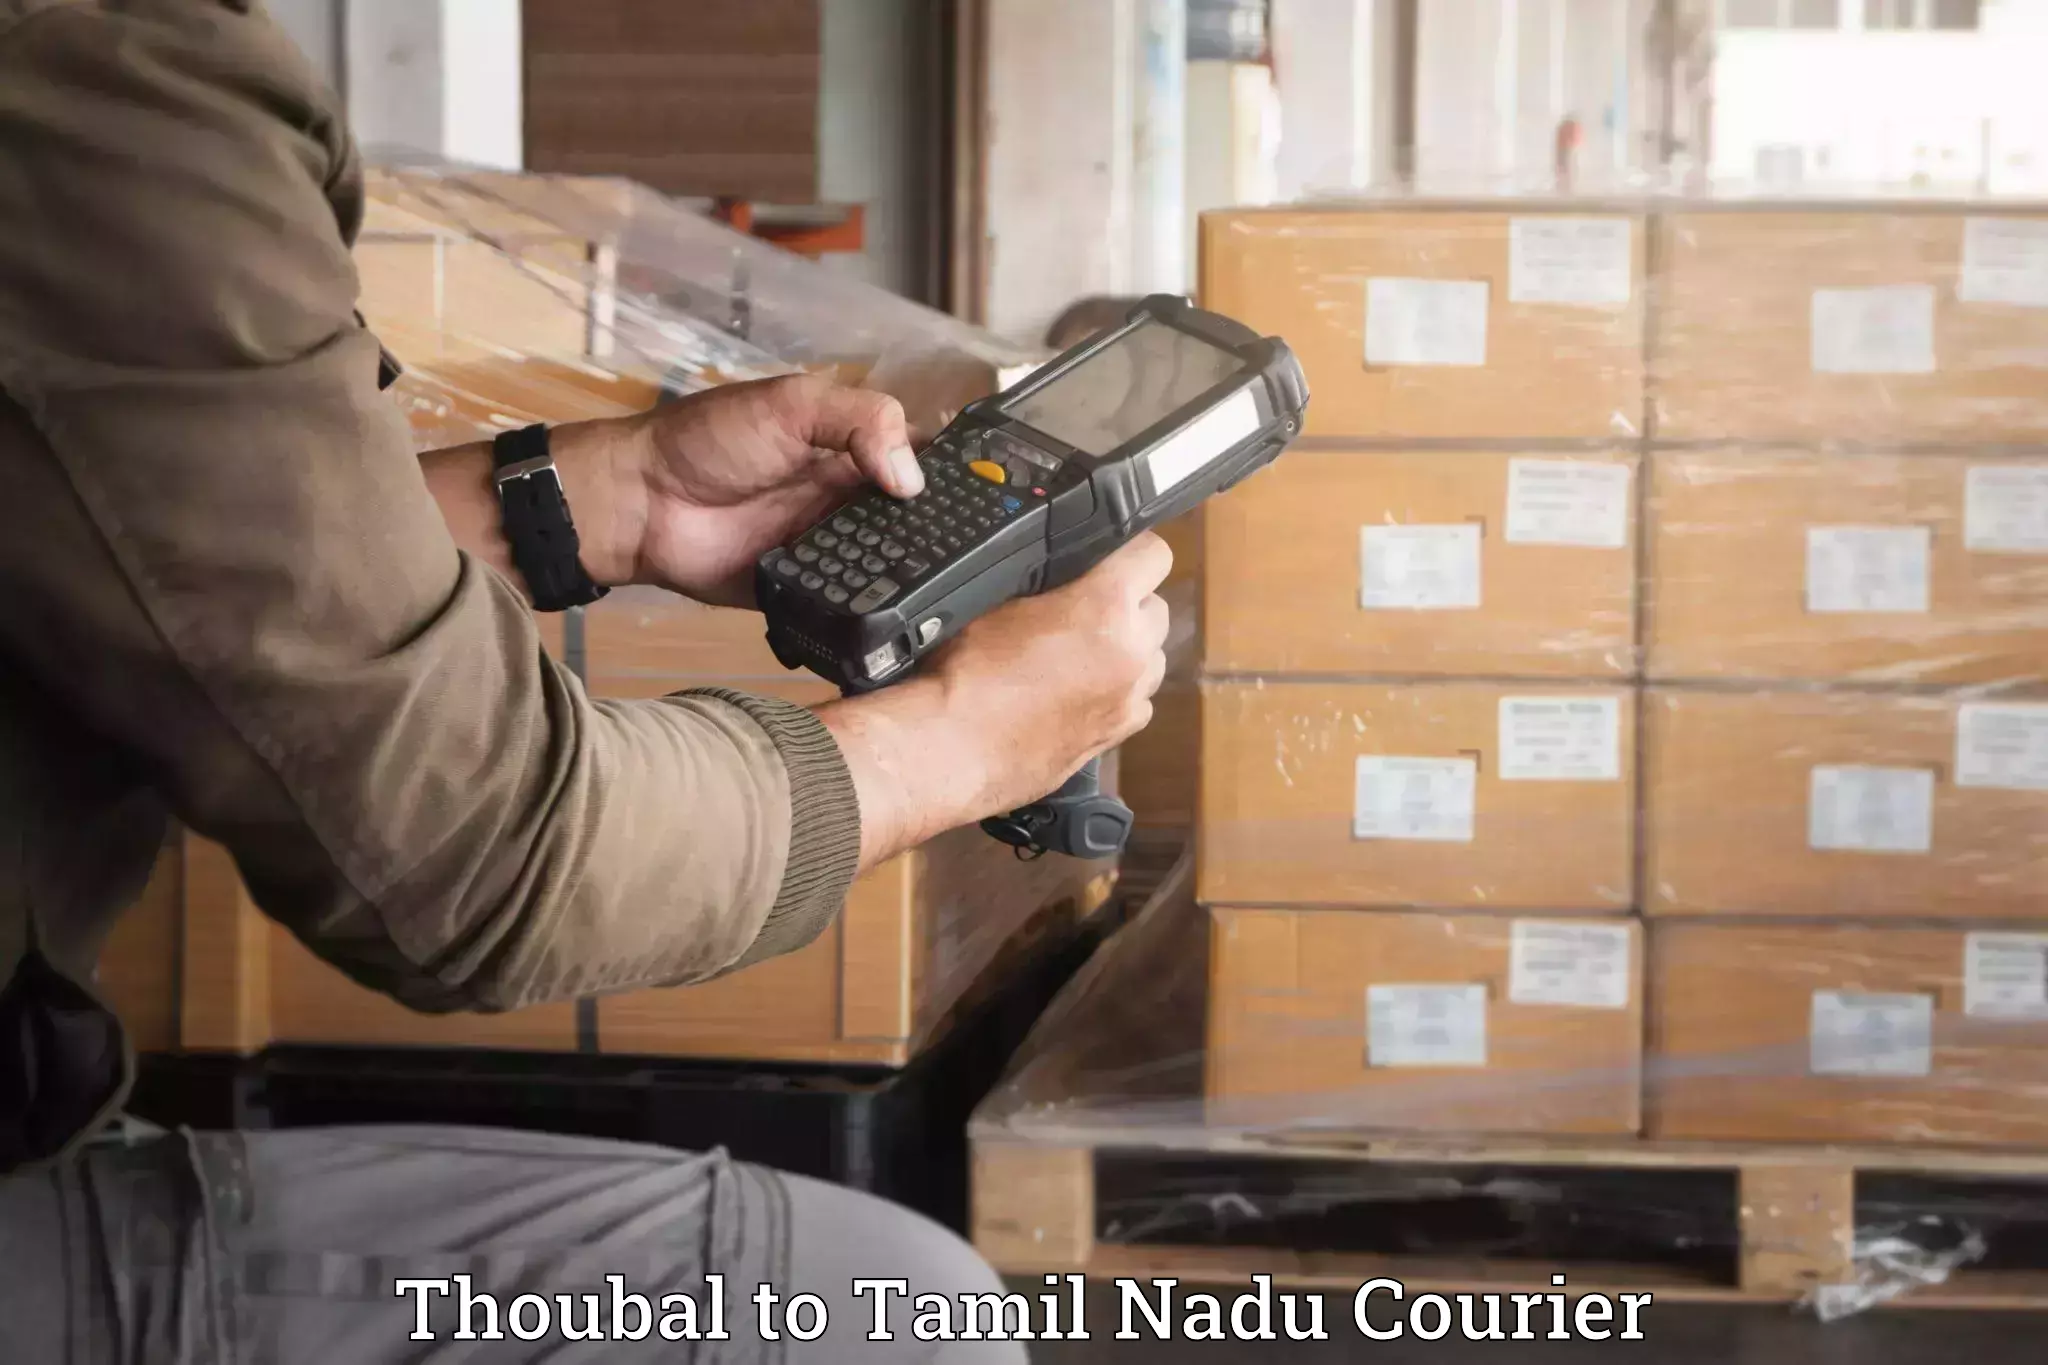 Luggage transfer service Thoubal to Tamil Nadu